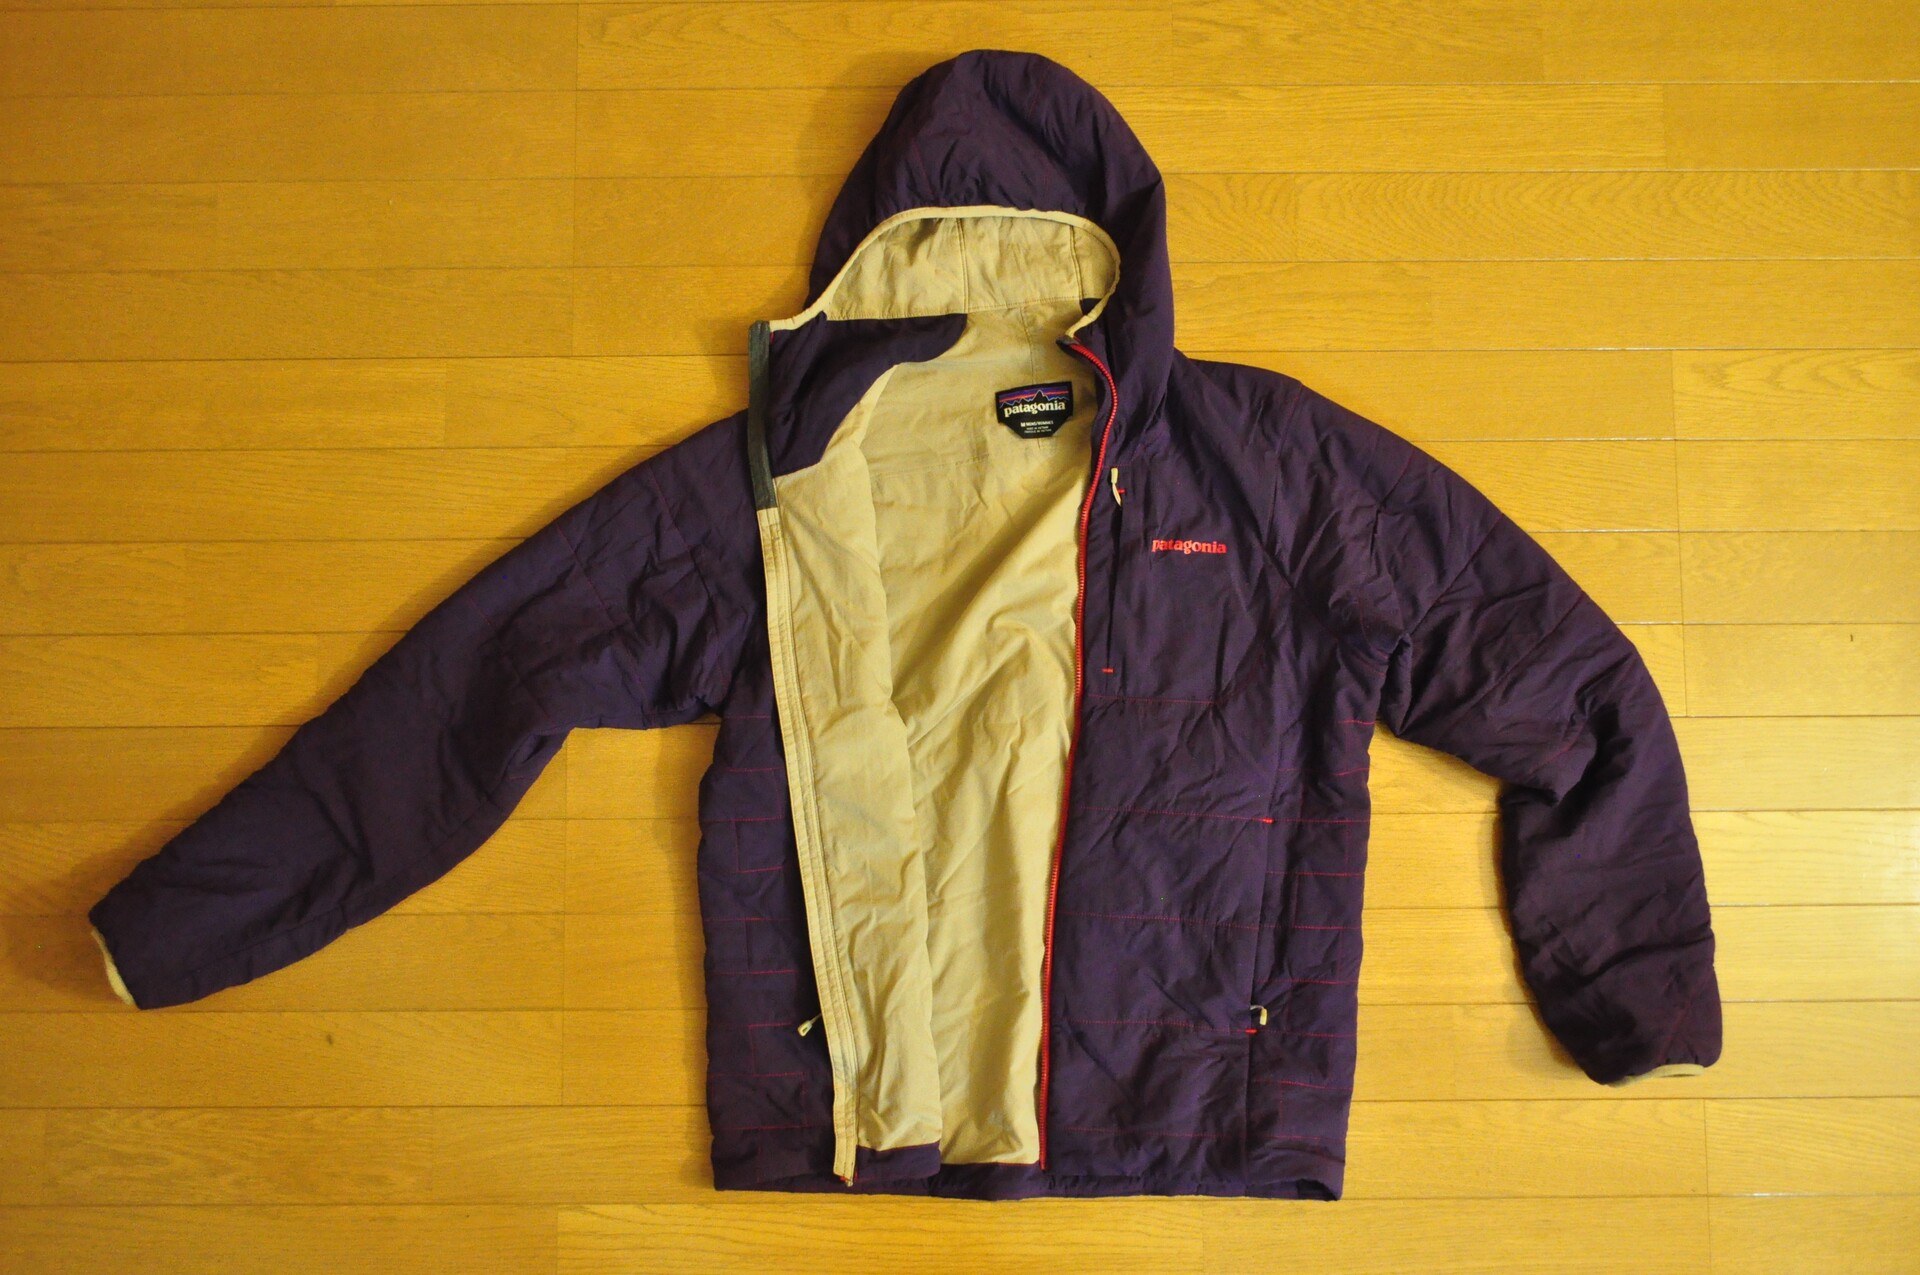 An overhead product shot of a lightweight purple insulating jacket